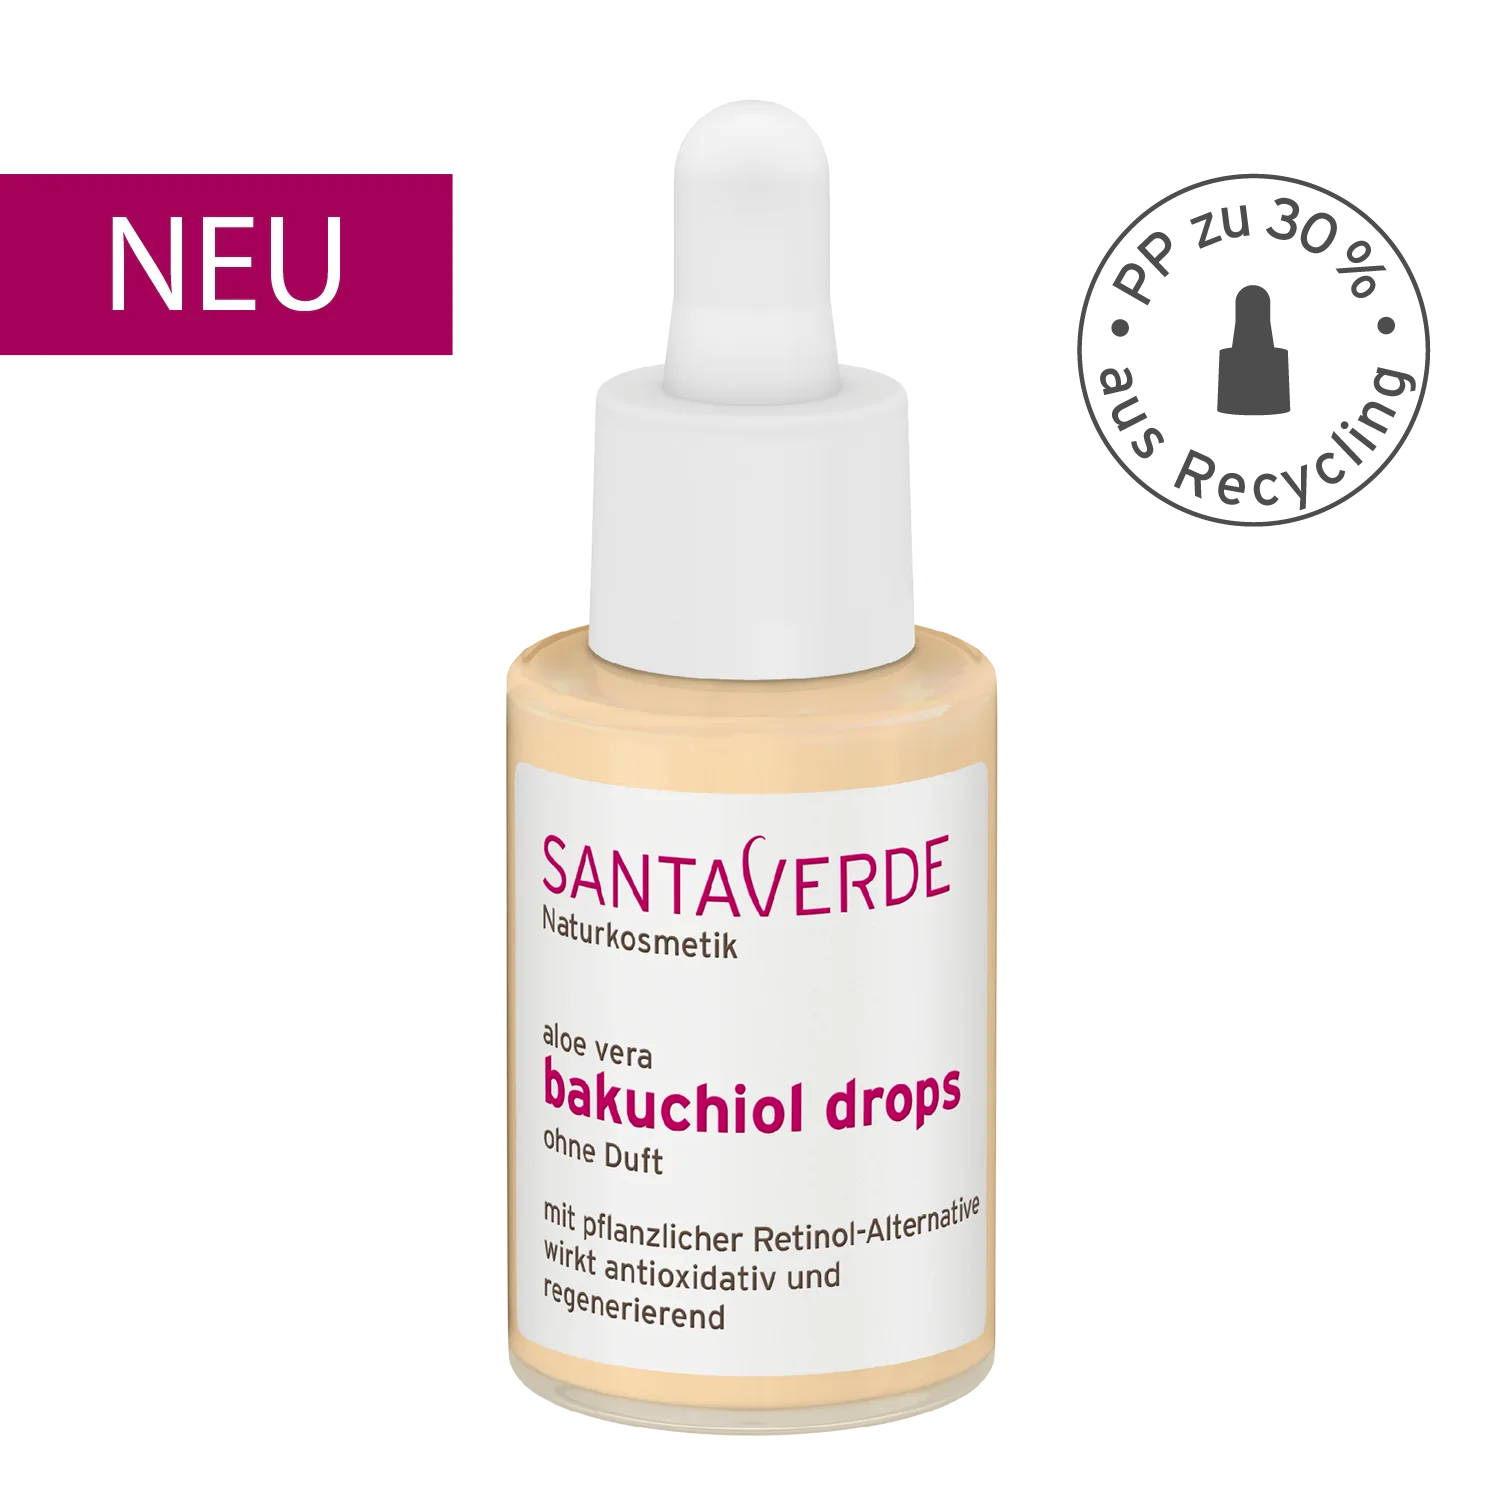 Santaverde bakuchiol drops | 30ml | Aloe Vera & ohne Duft